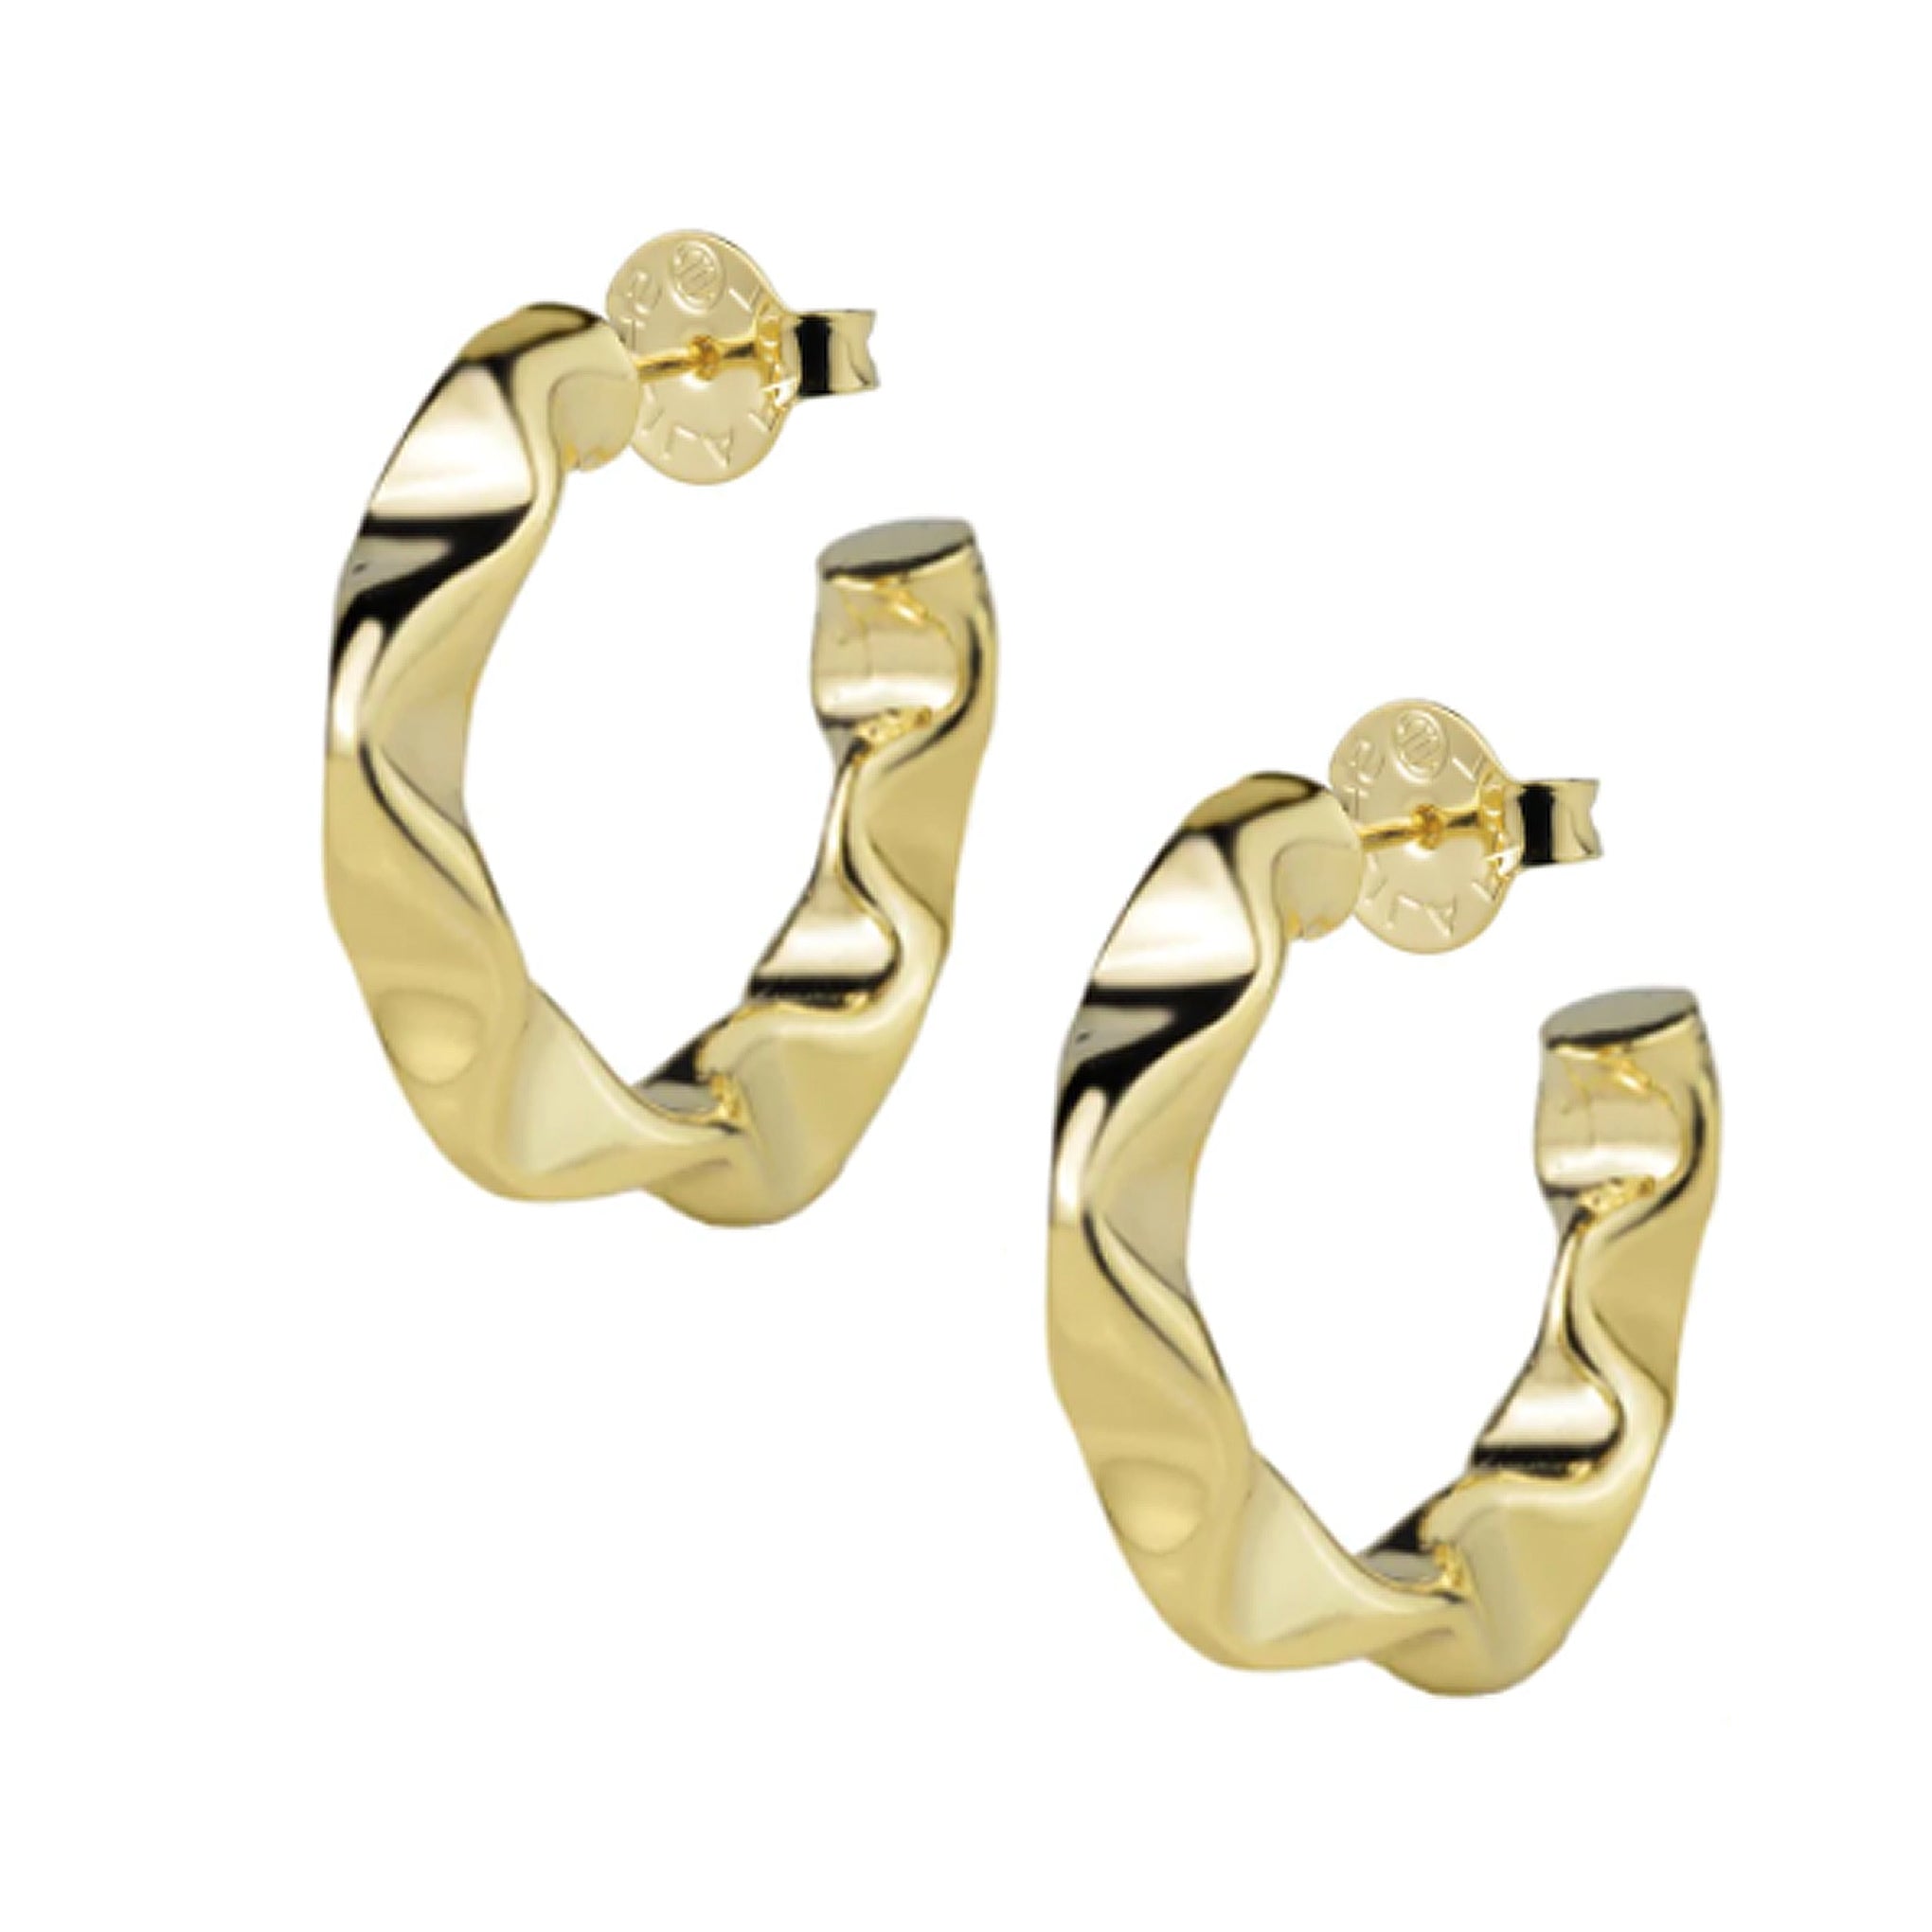 Sheila Fajl Wrinkled Hoop Earrings in Polished Gold Plated